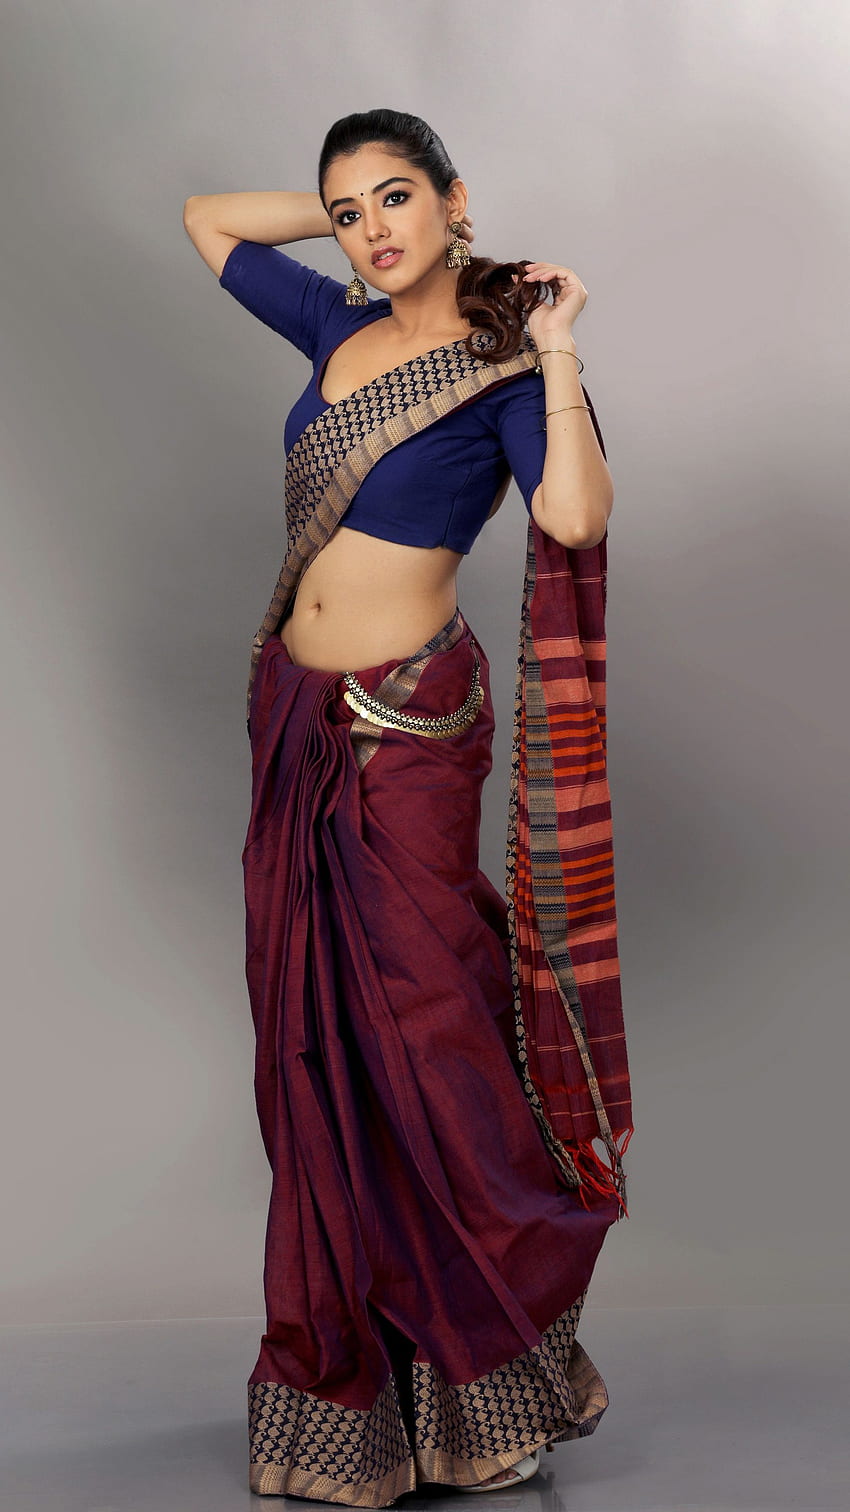 Malavika sharma, amoureuse du sari, actrice telugu, spectacle de nombril Fond d'écran de téléphone HD